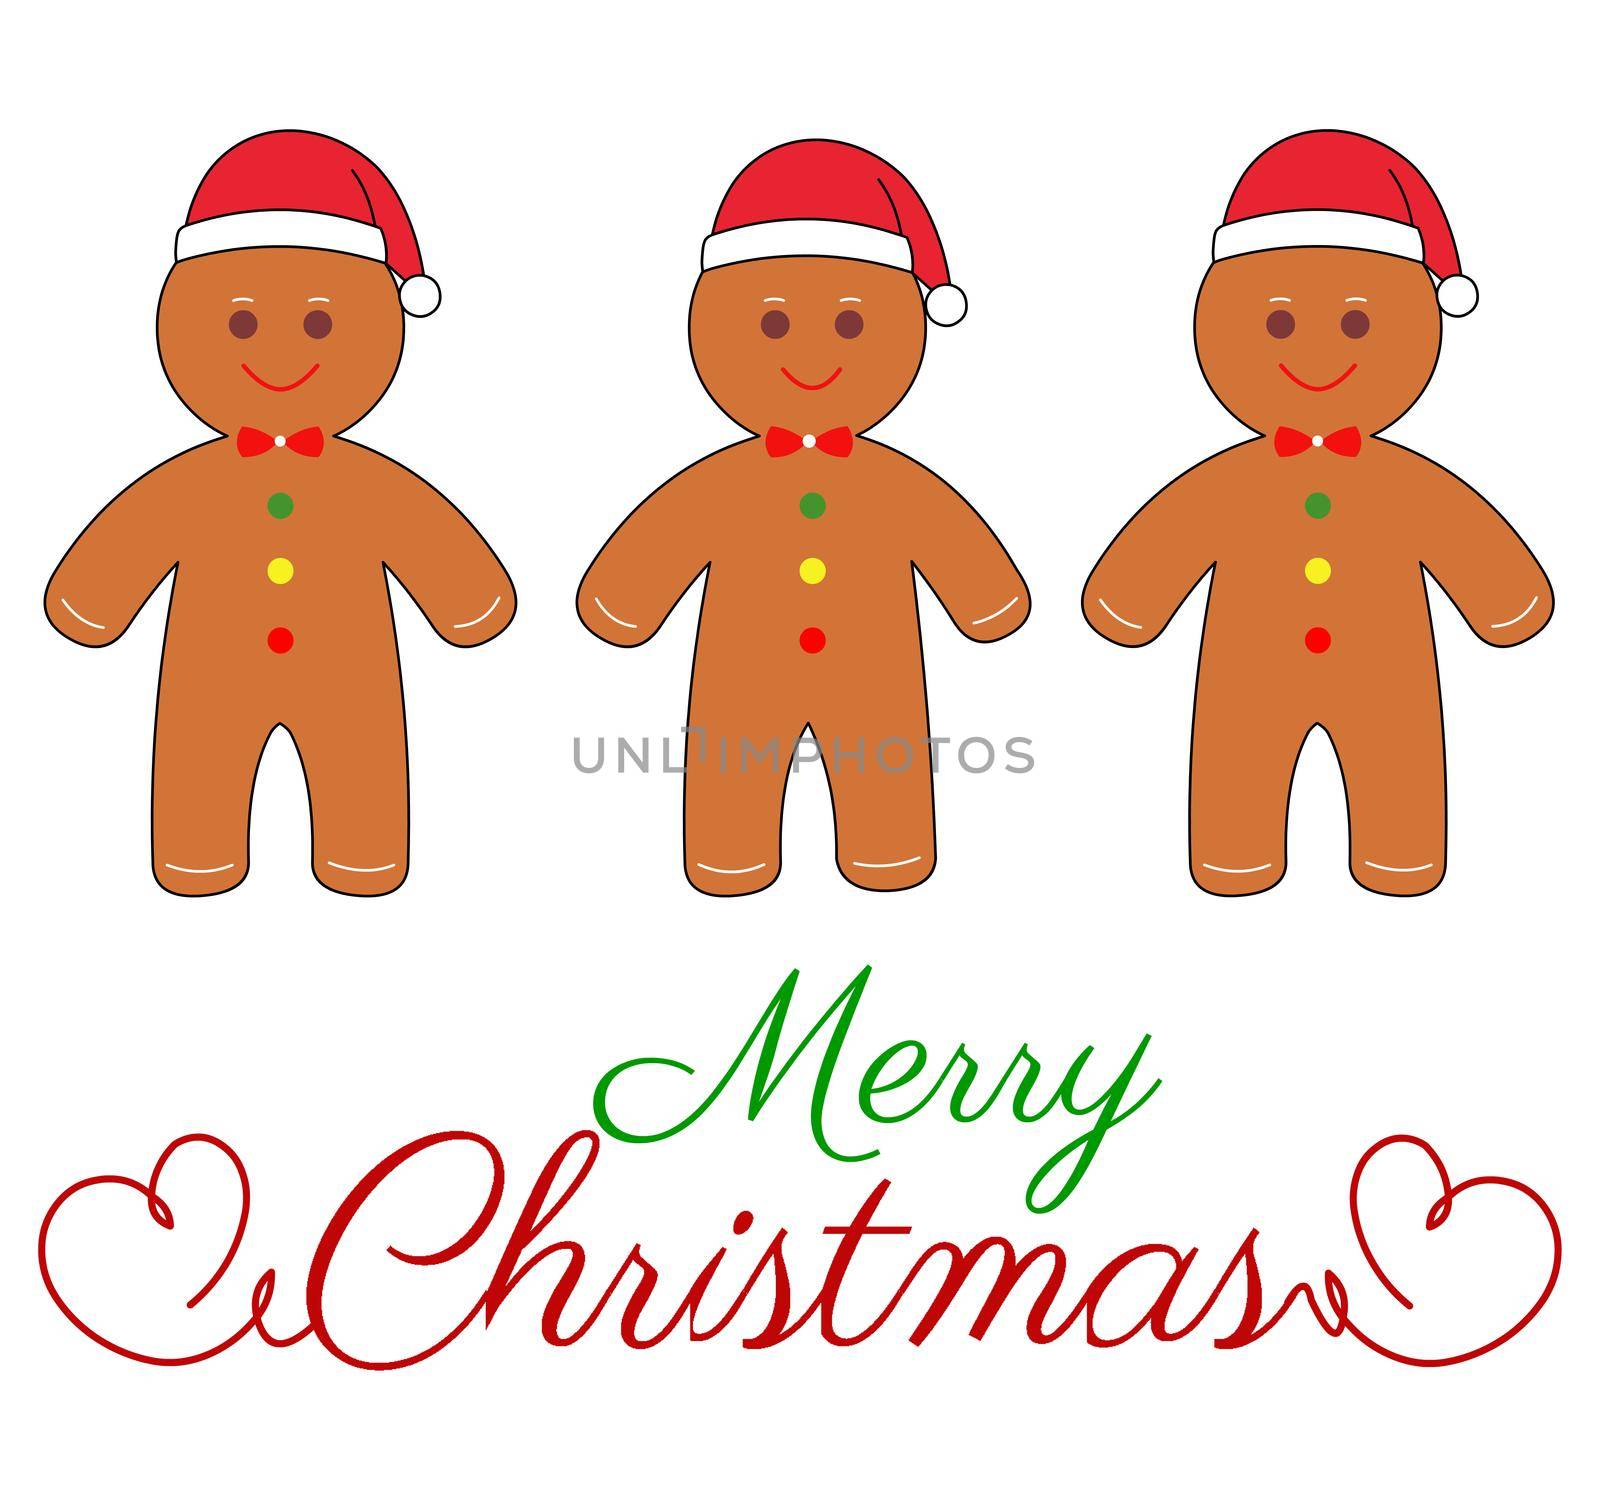 Merry christmas gingerbread men by Bigalbaloo